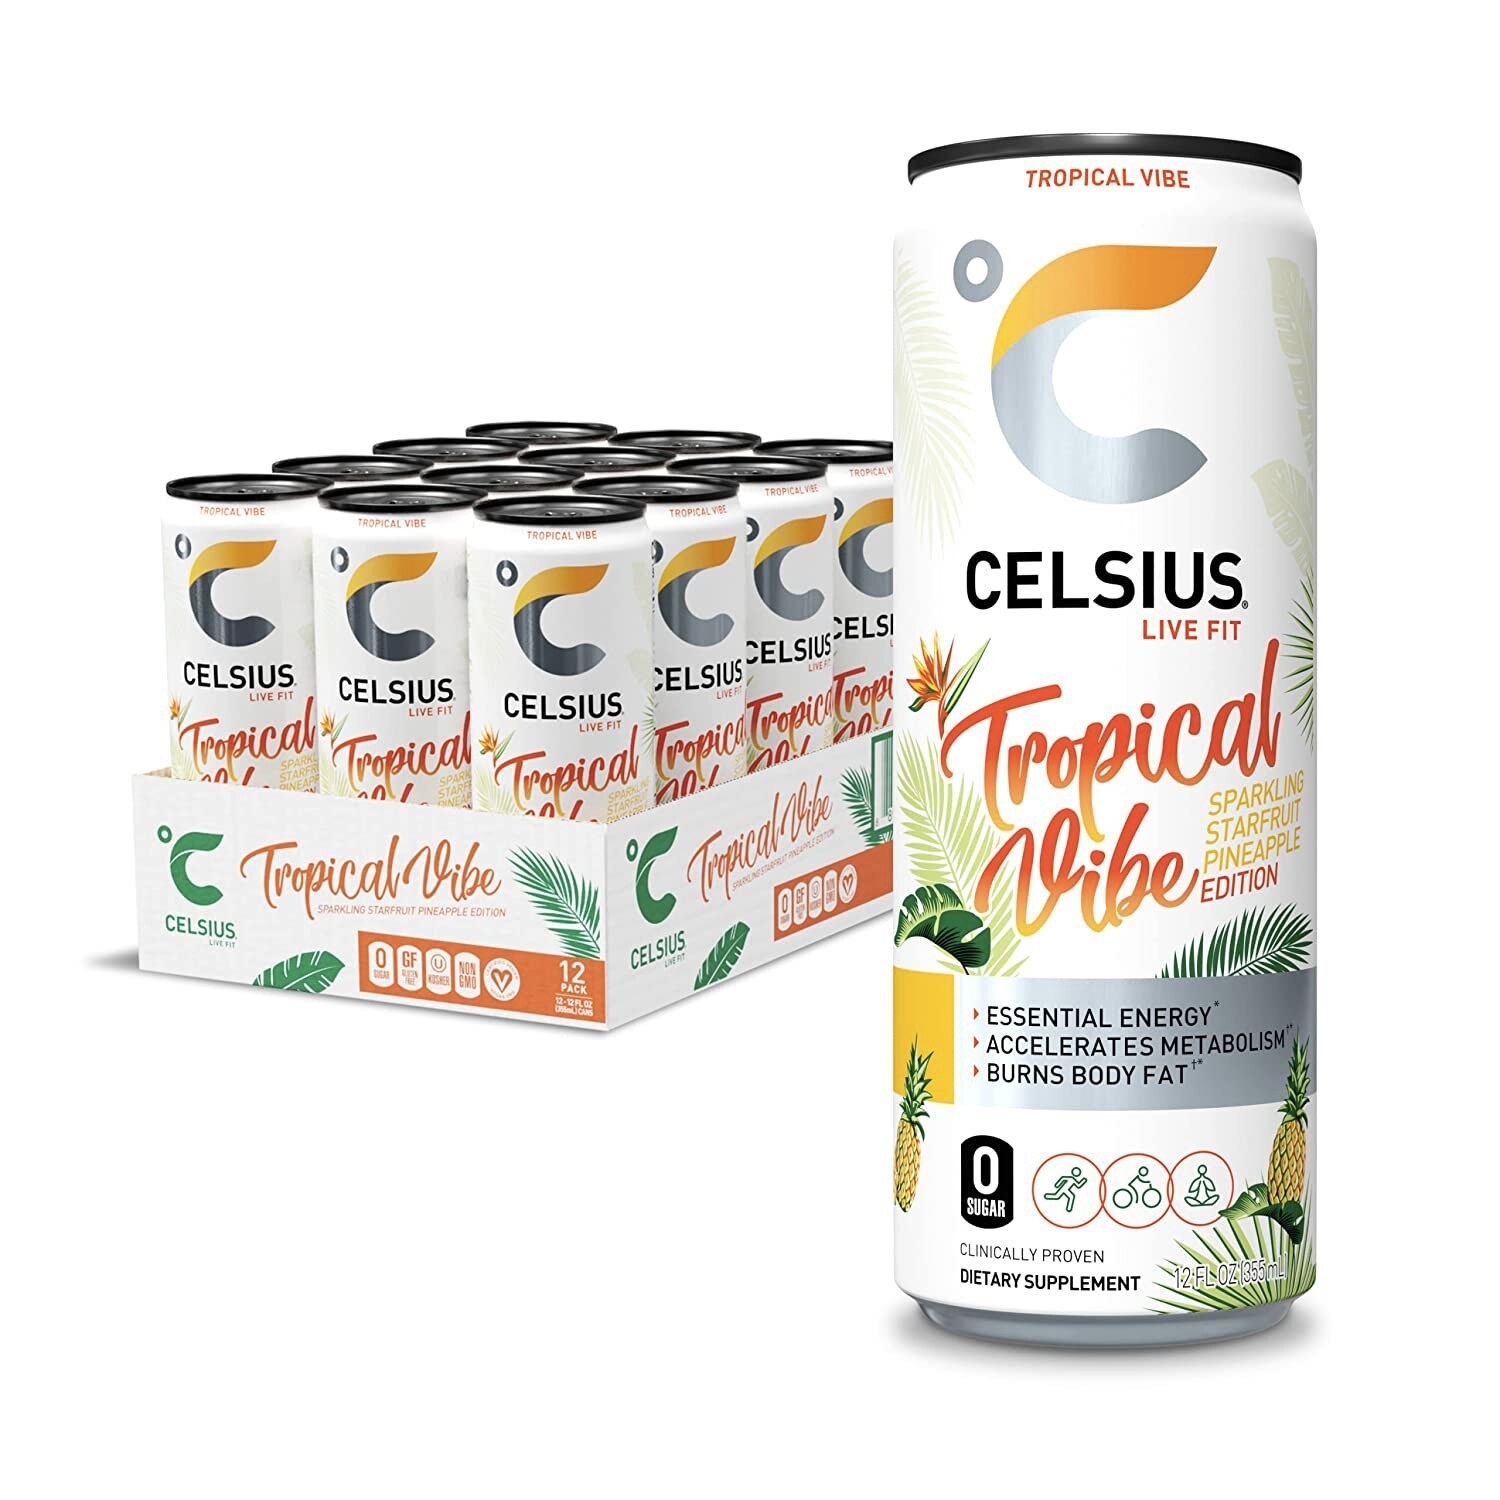 Celsius live fit tropical vibe drinks